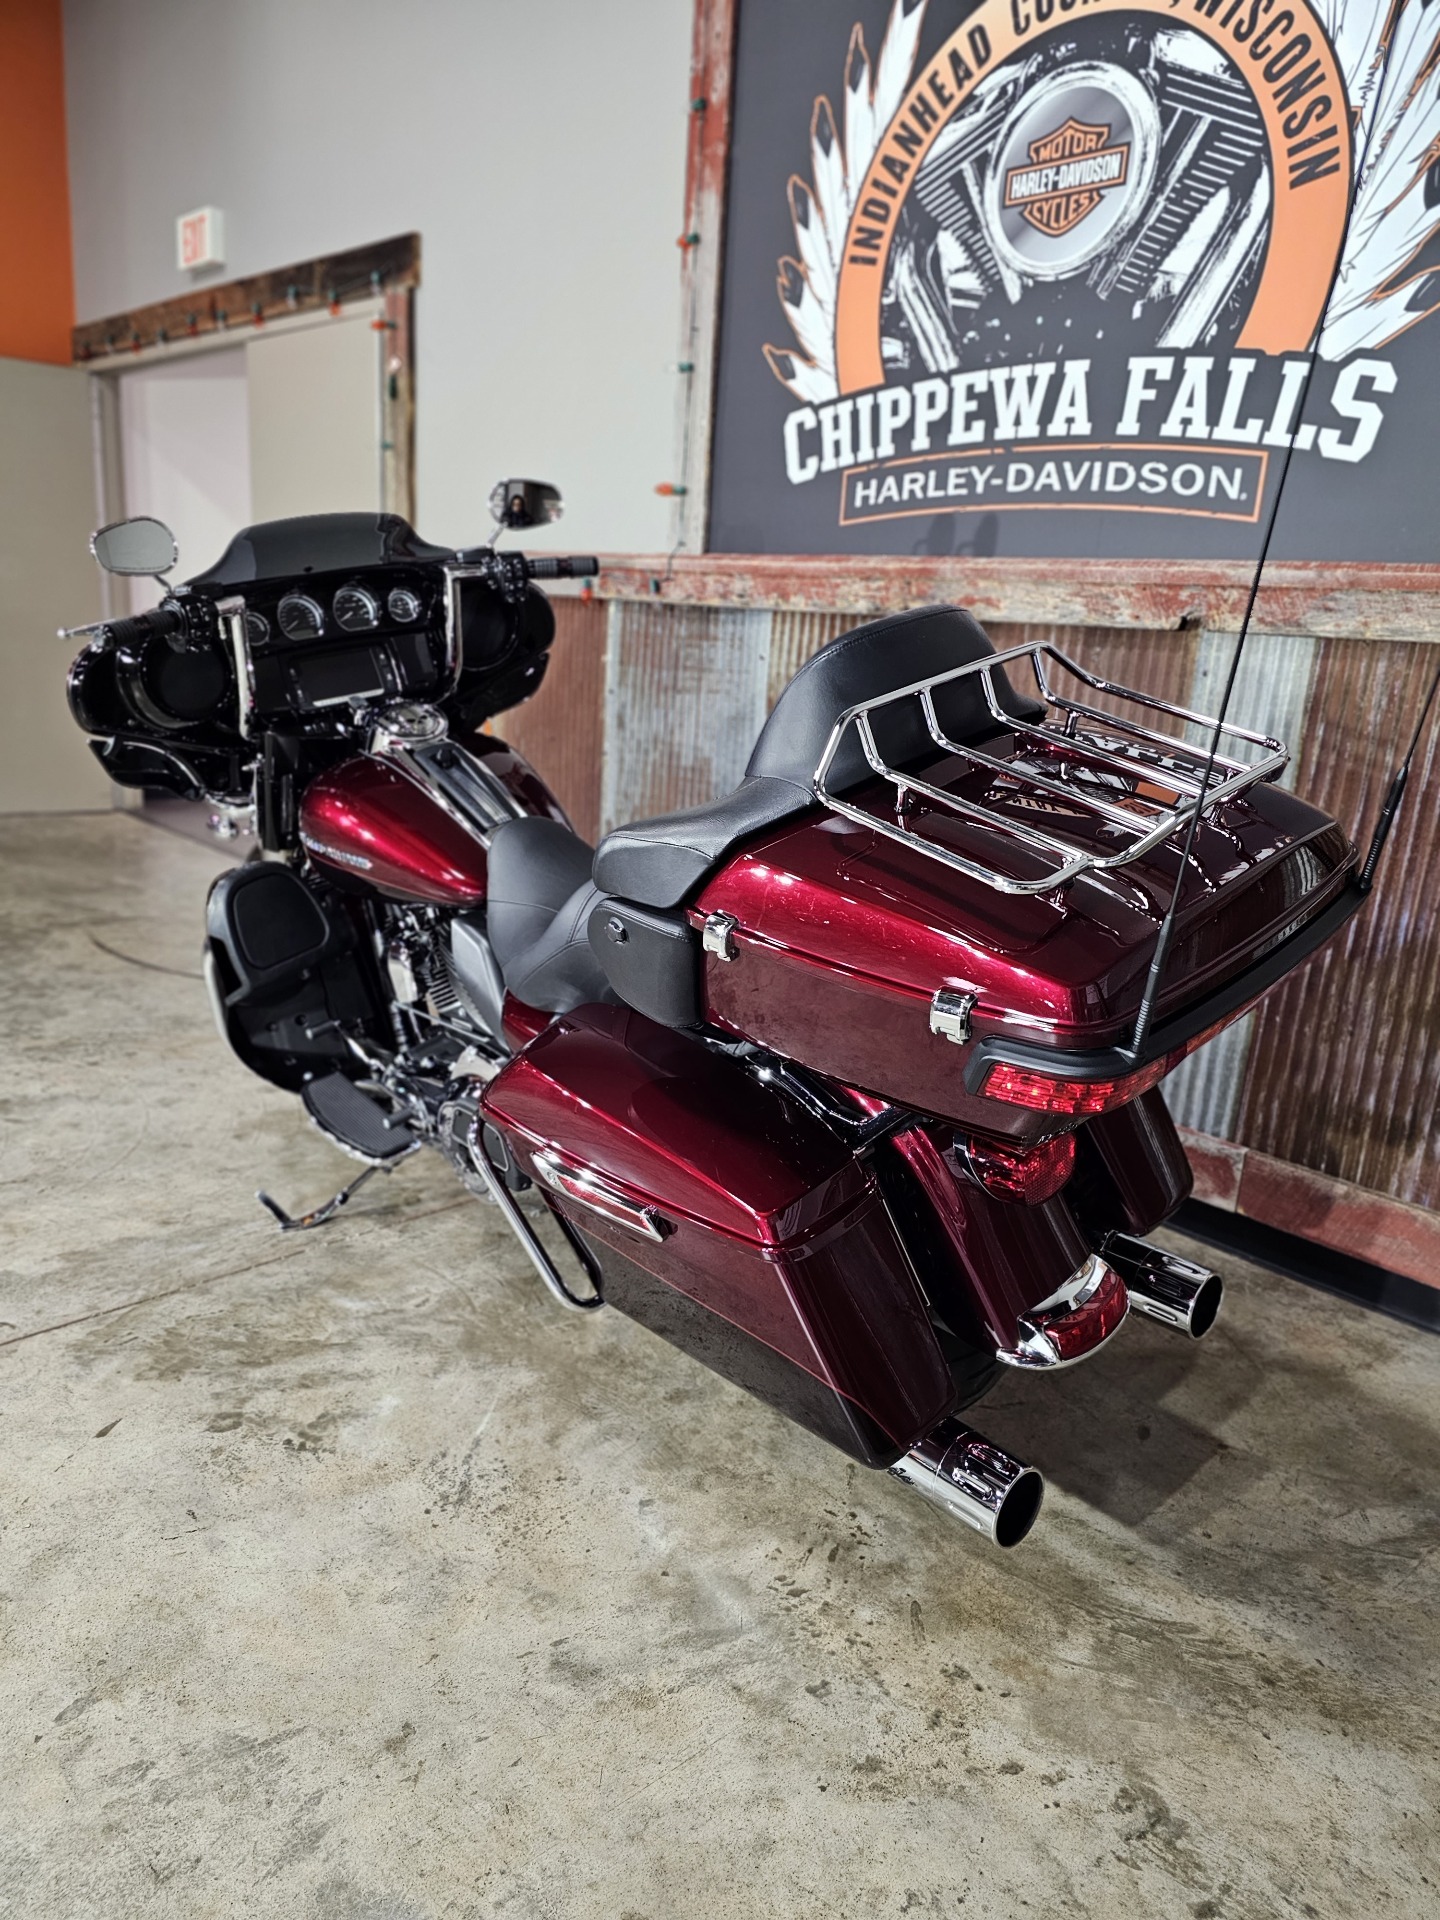 2014 Harley-Davidson Ultra Limited in Chippewa Falls, Wisconsin - Photo 16